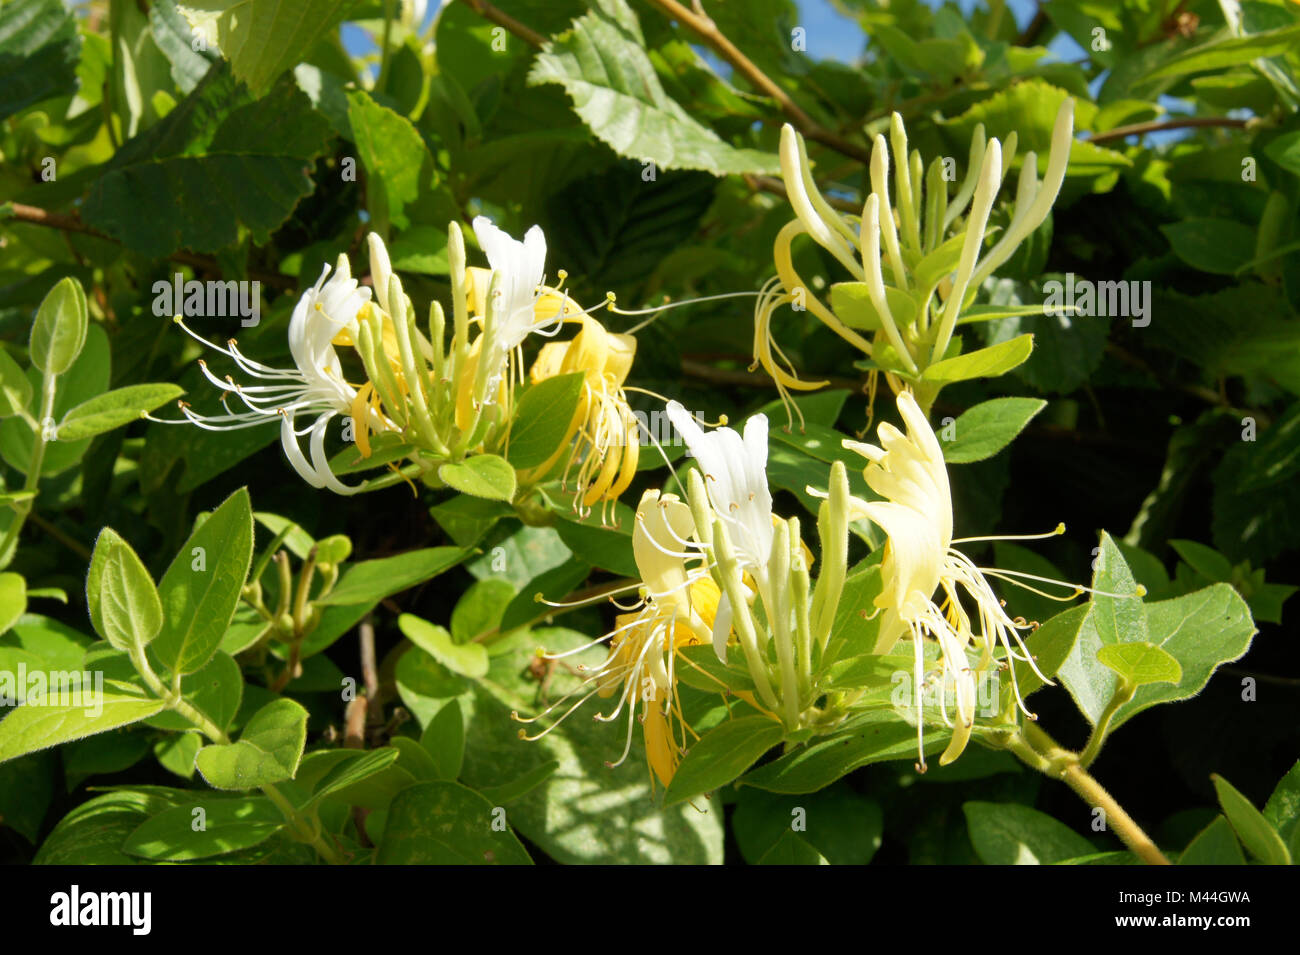 Lonicera caprifolium, Jelängerjelieber, honeysuckle Stock Photo